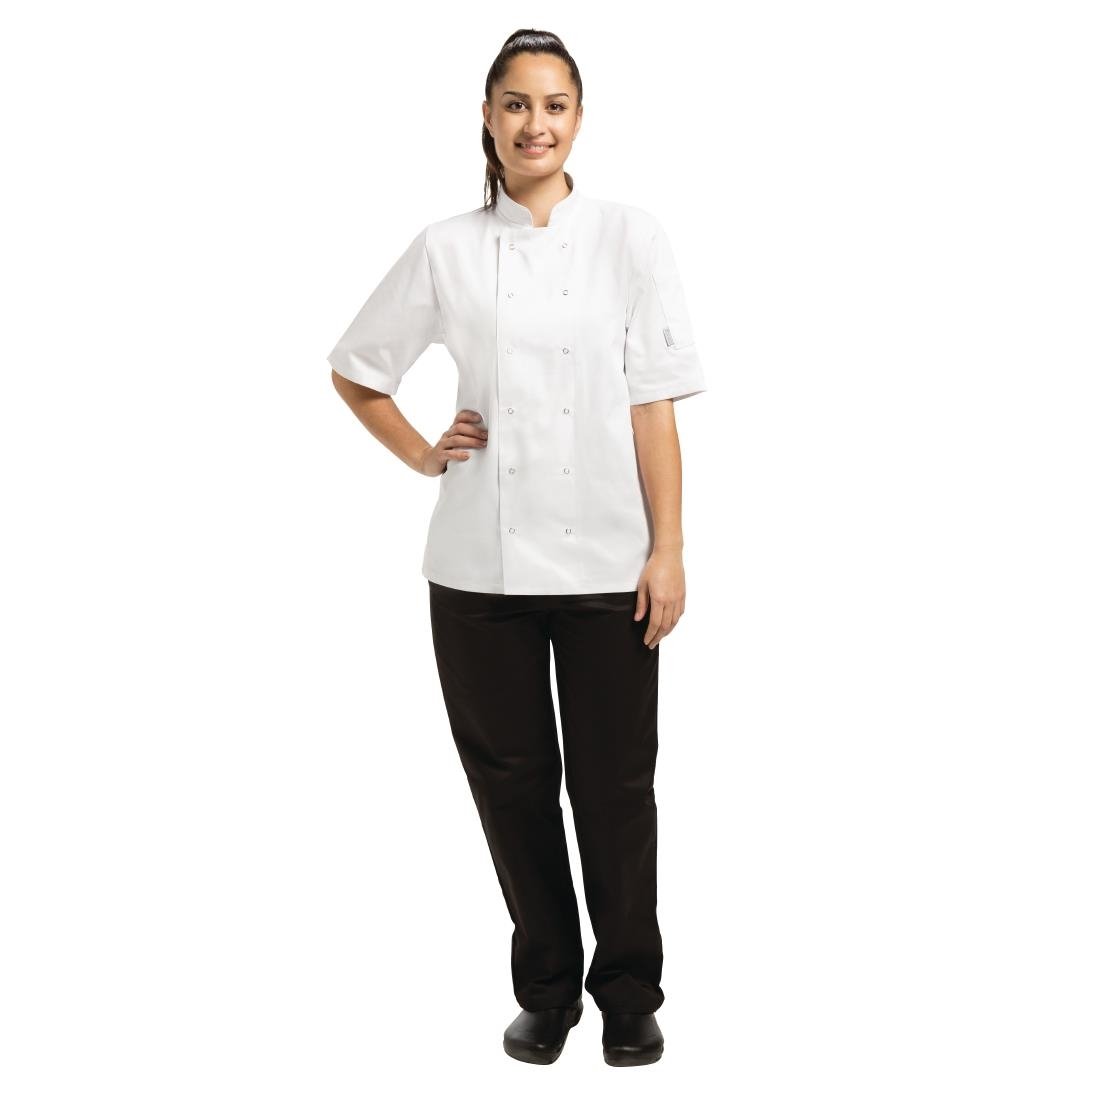 A211-S Whites Vegas Unisex Chefs Jacket Short Sleeve White S JD Catering Equipment Solutions Ltd